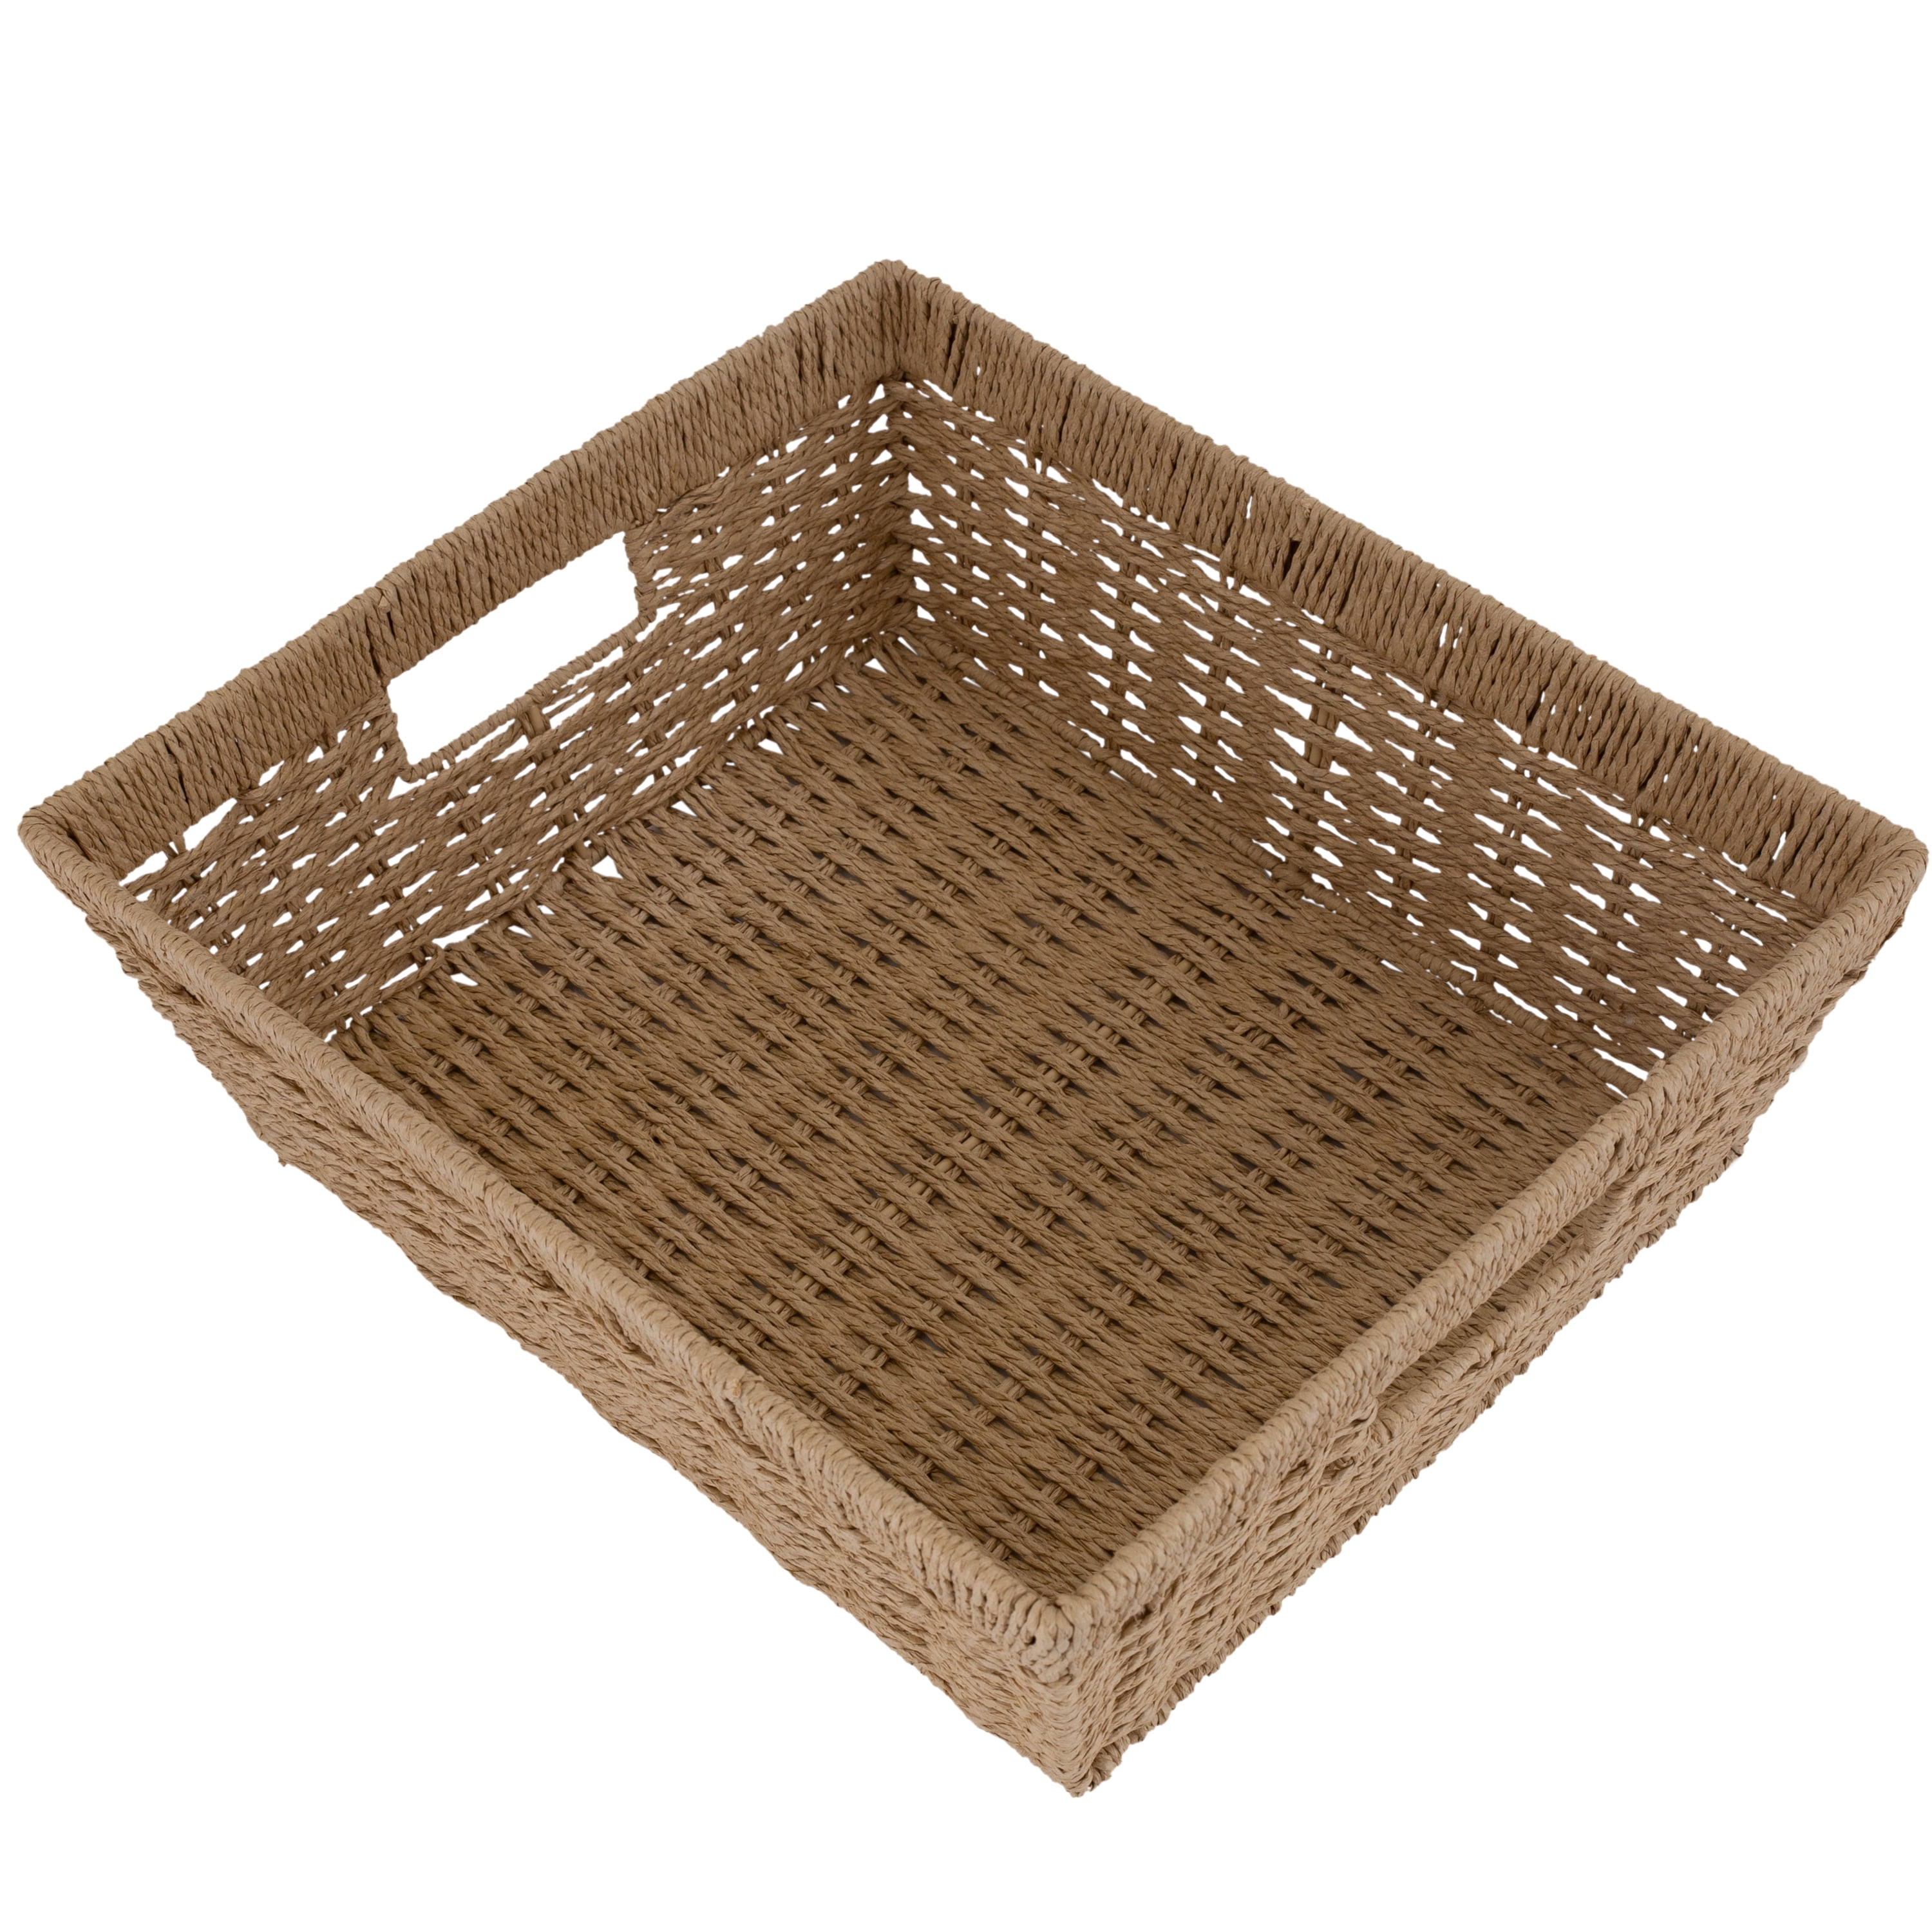 Handled Storage Basket Weaving Kit – Textile Indie